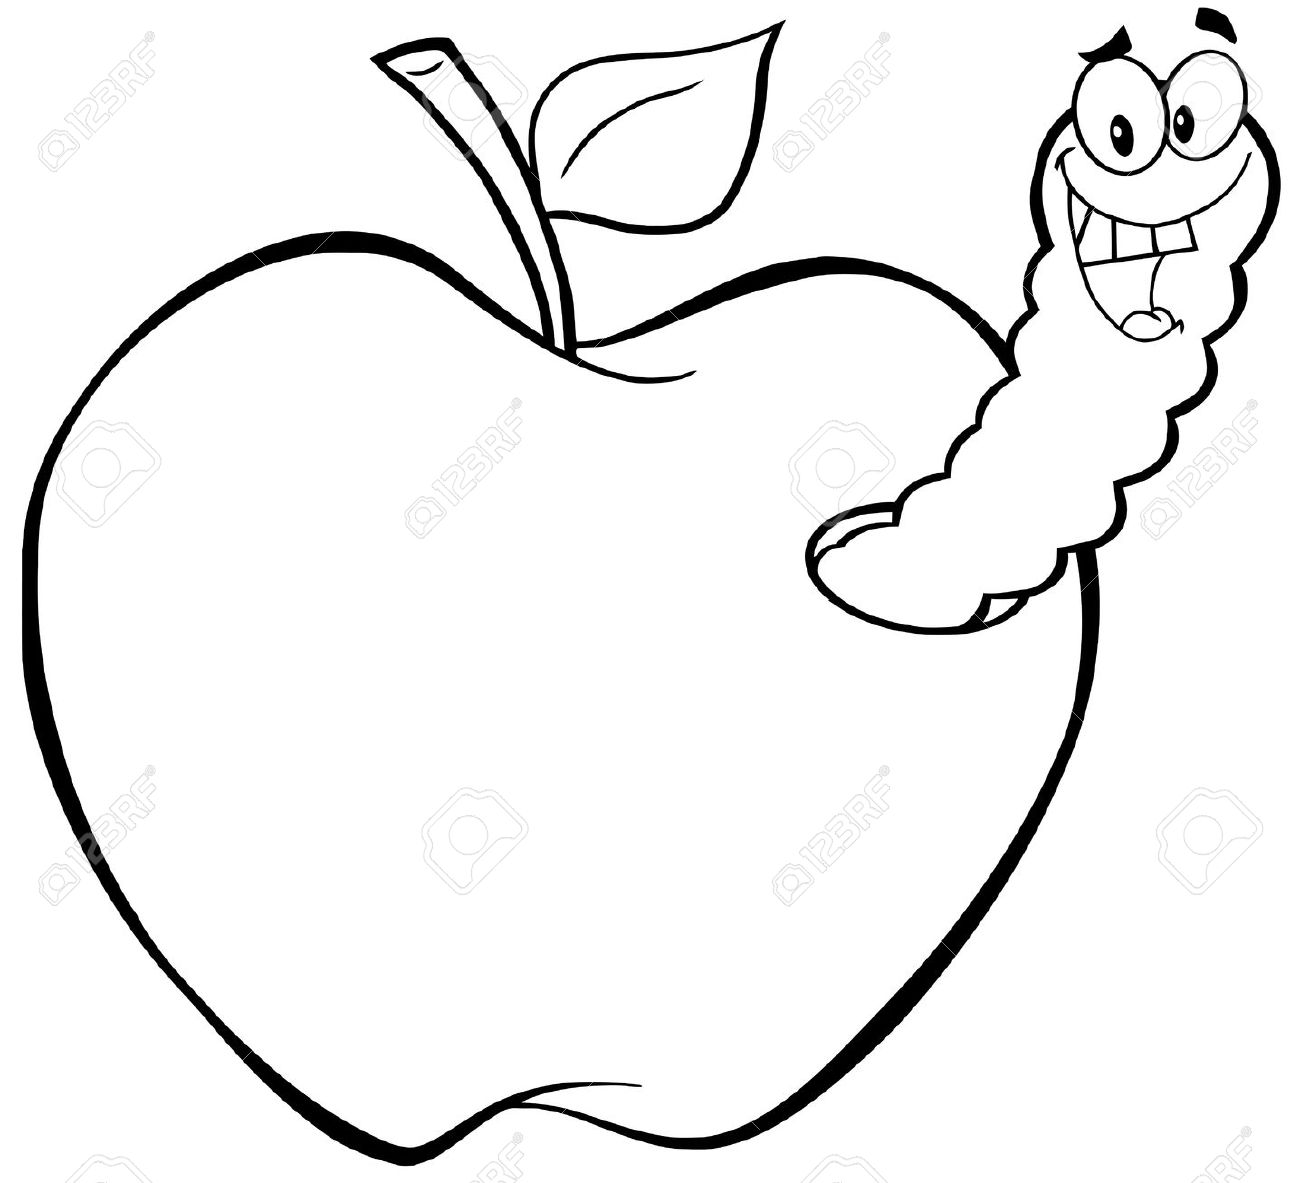 Cartoon Apple With Worm